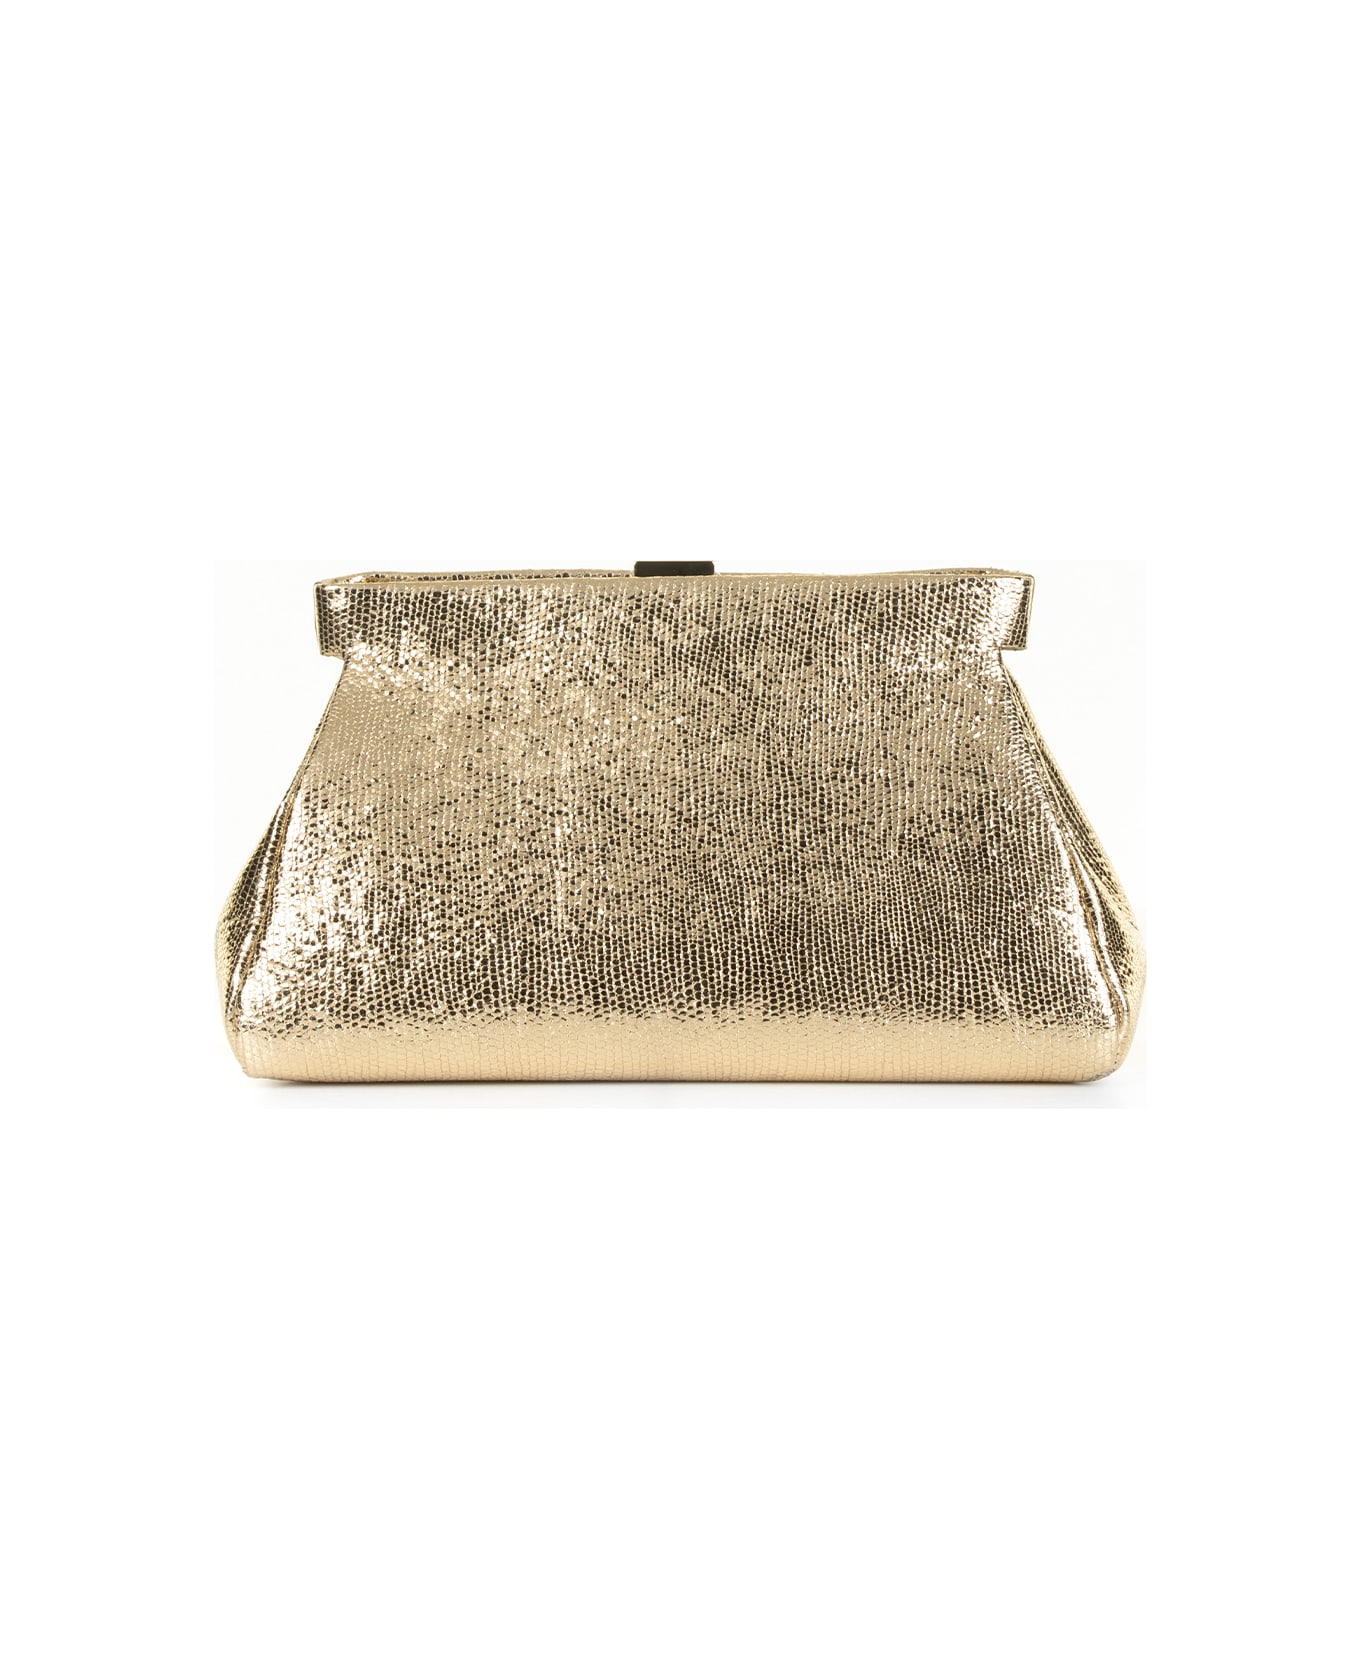 Demellier Metallic Cannes Clutch Bag - Gold